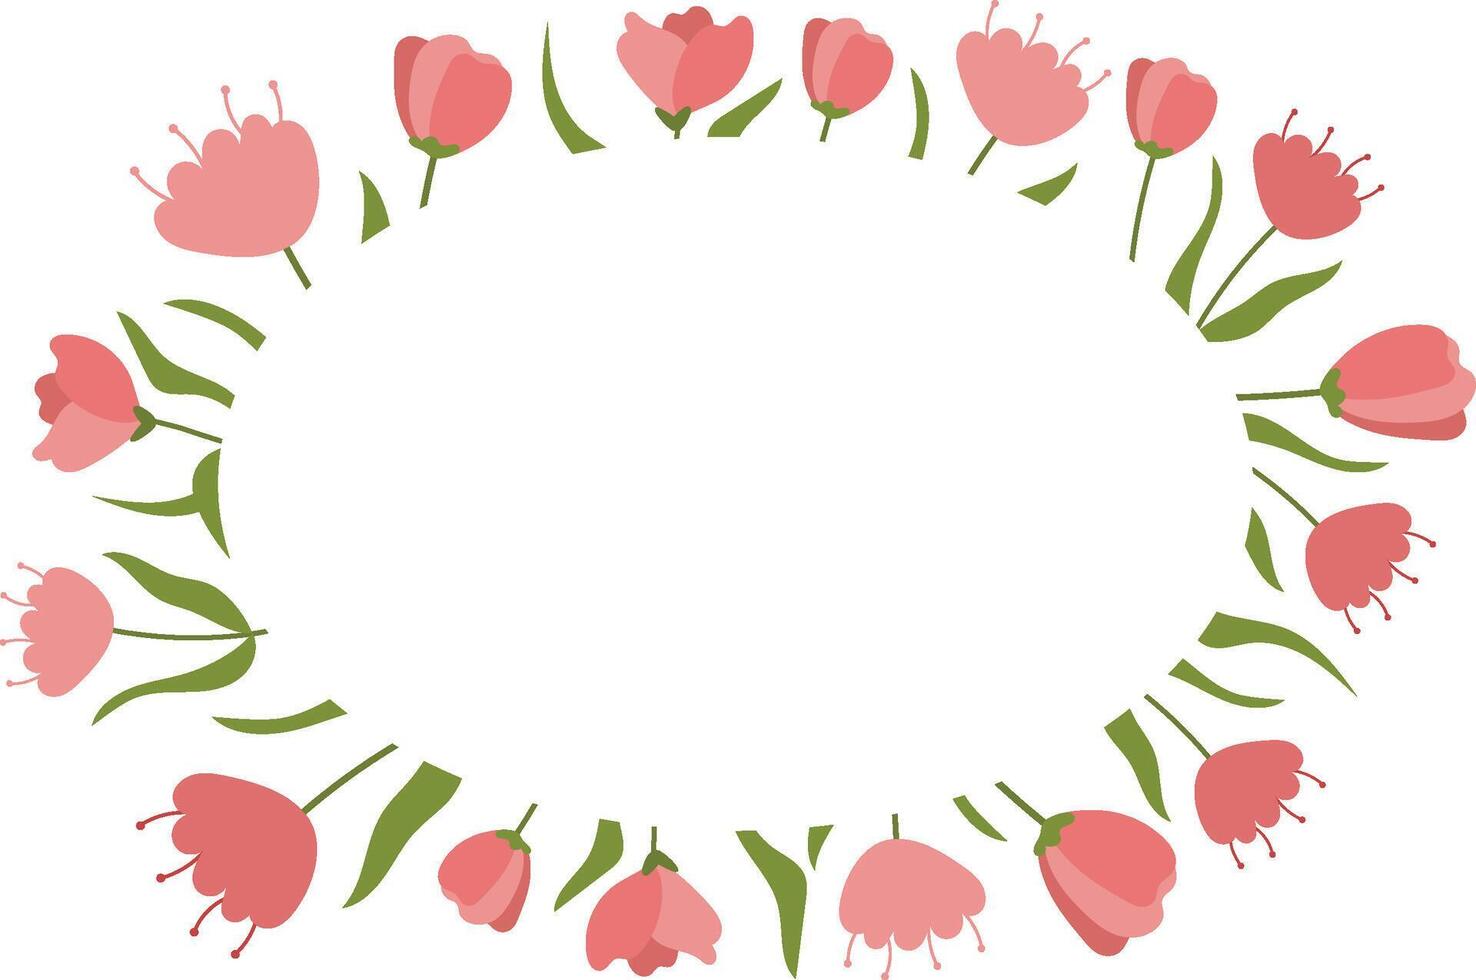 Abstract tulip flower background Vector design floral border frame minimal pink garden